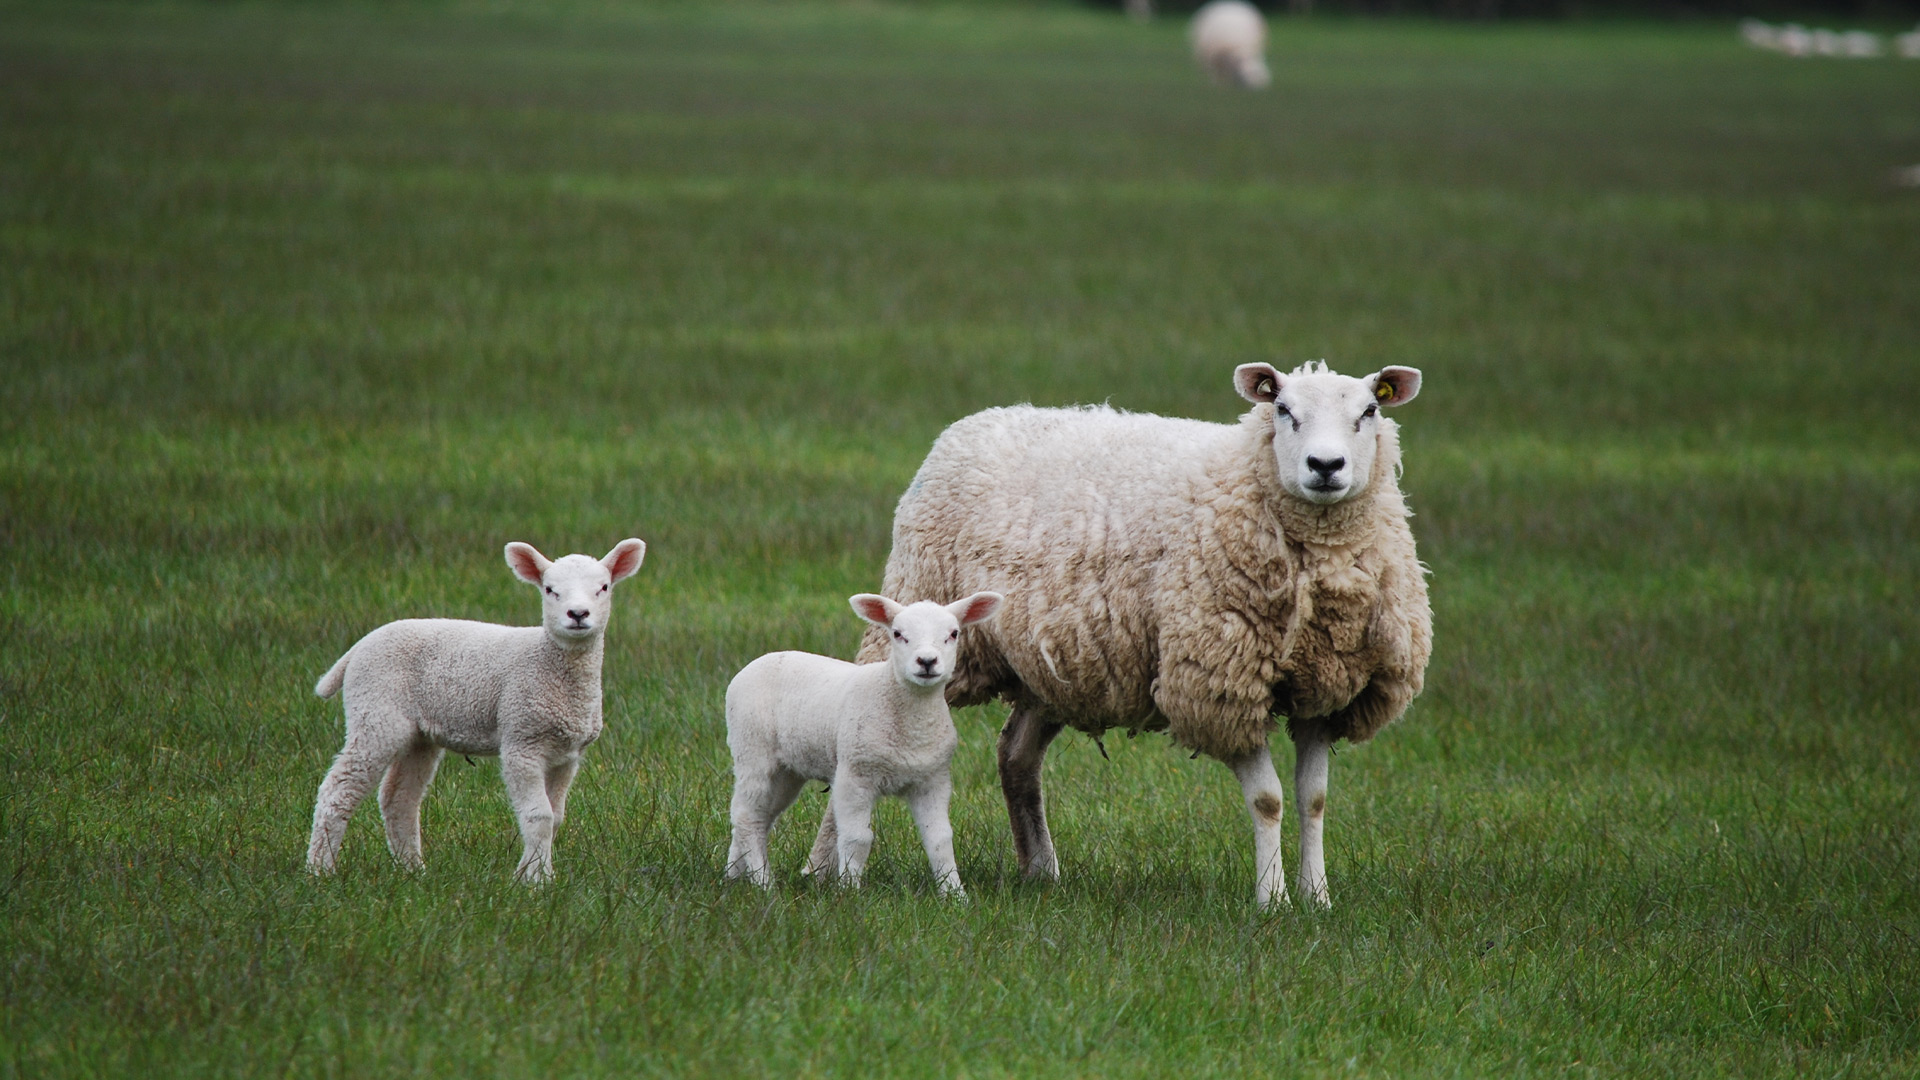 Sheep product range - situation - UK farmers - Brinicombe